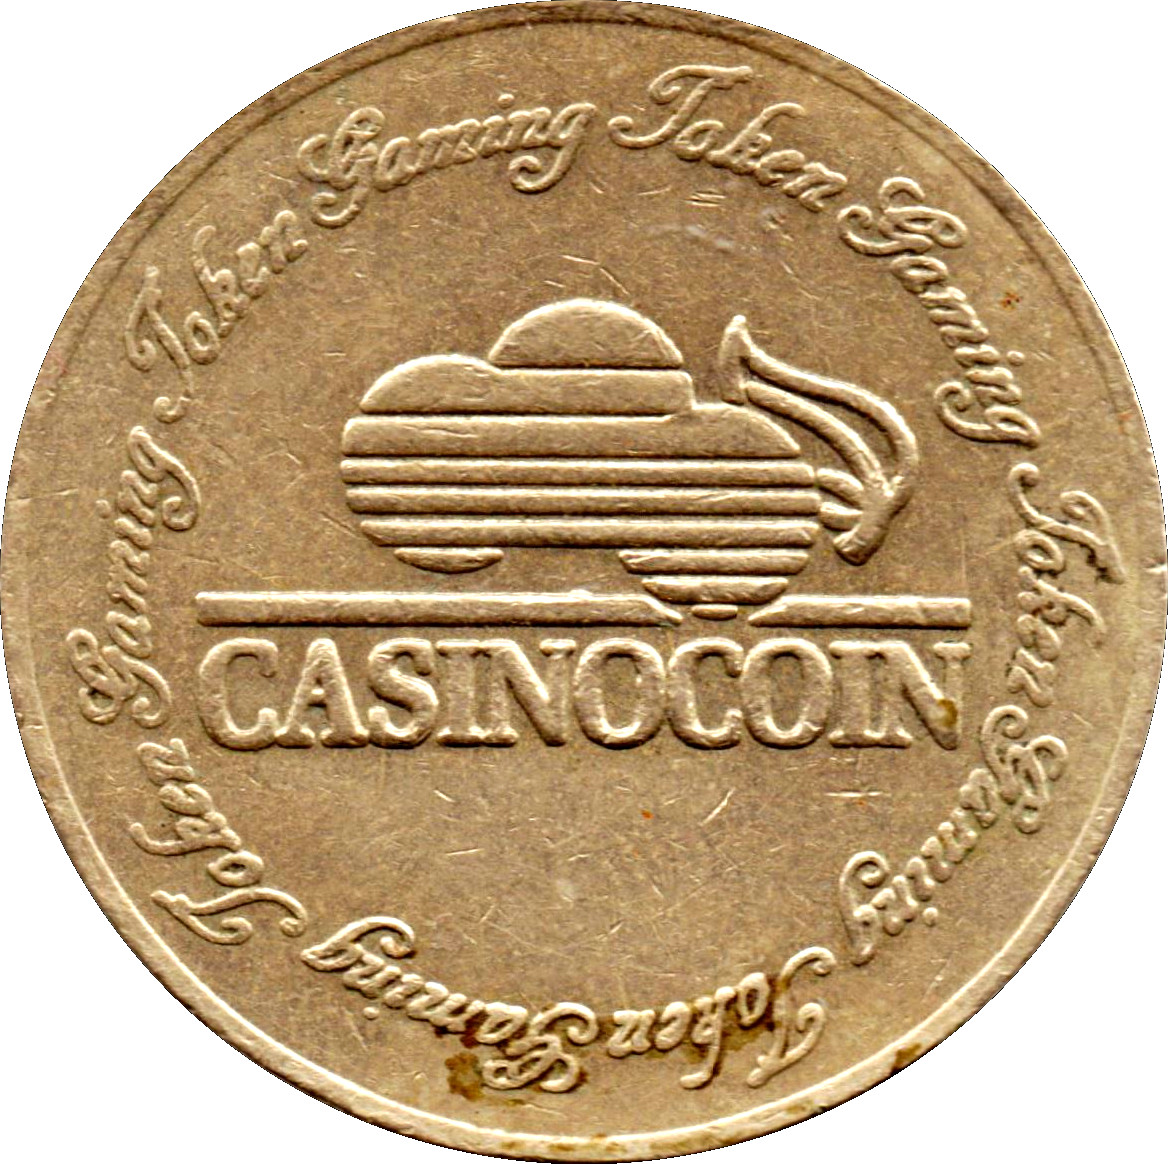 News - CasinoCoin